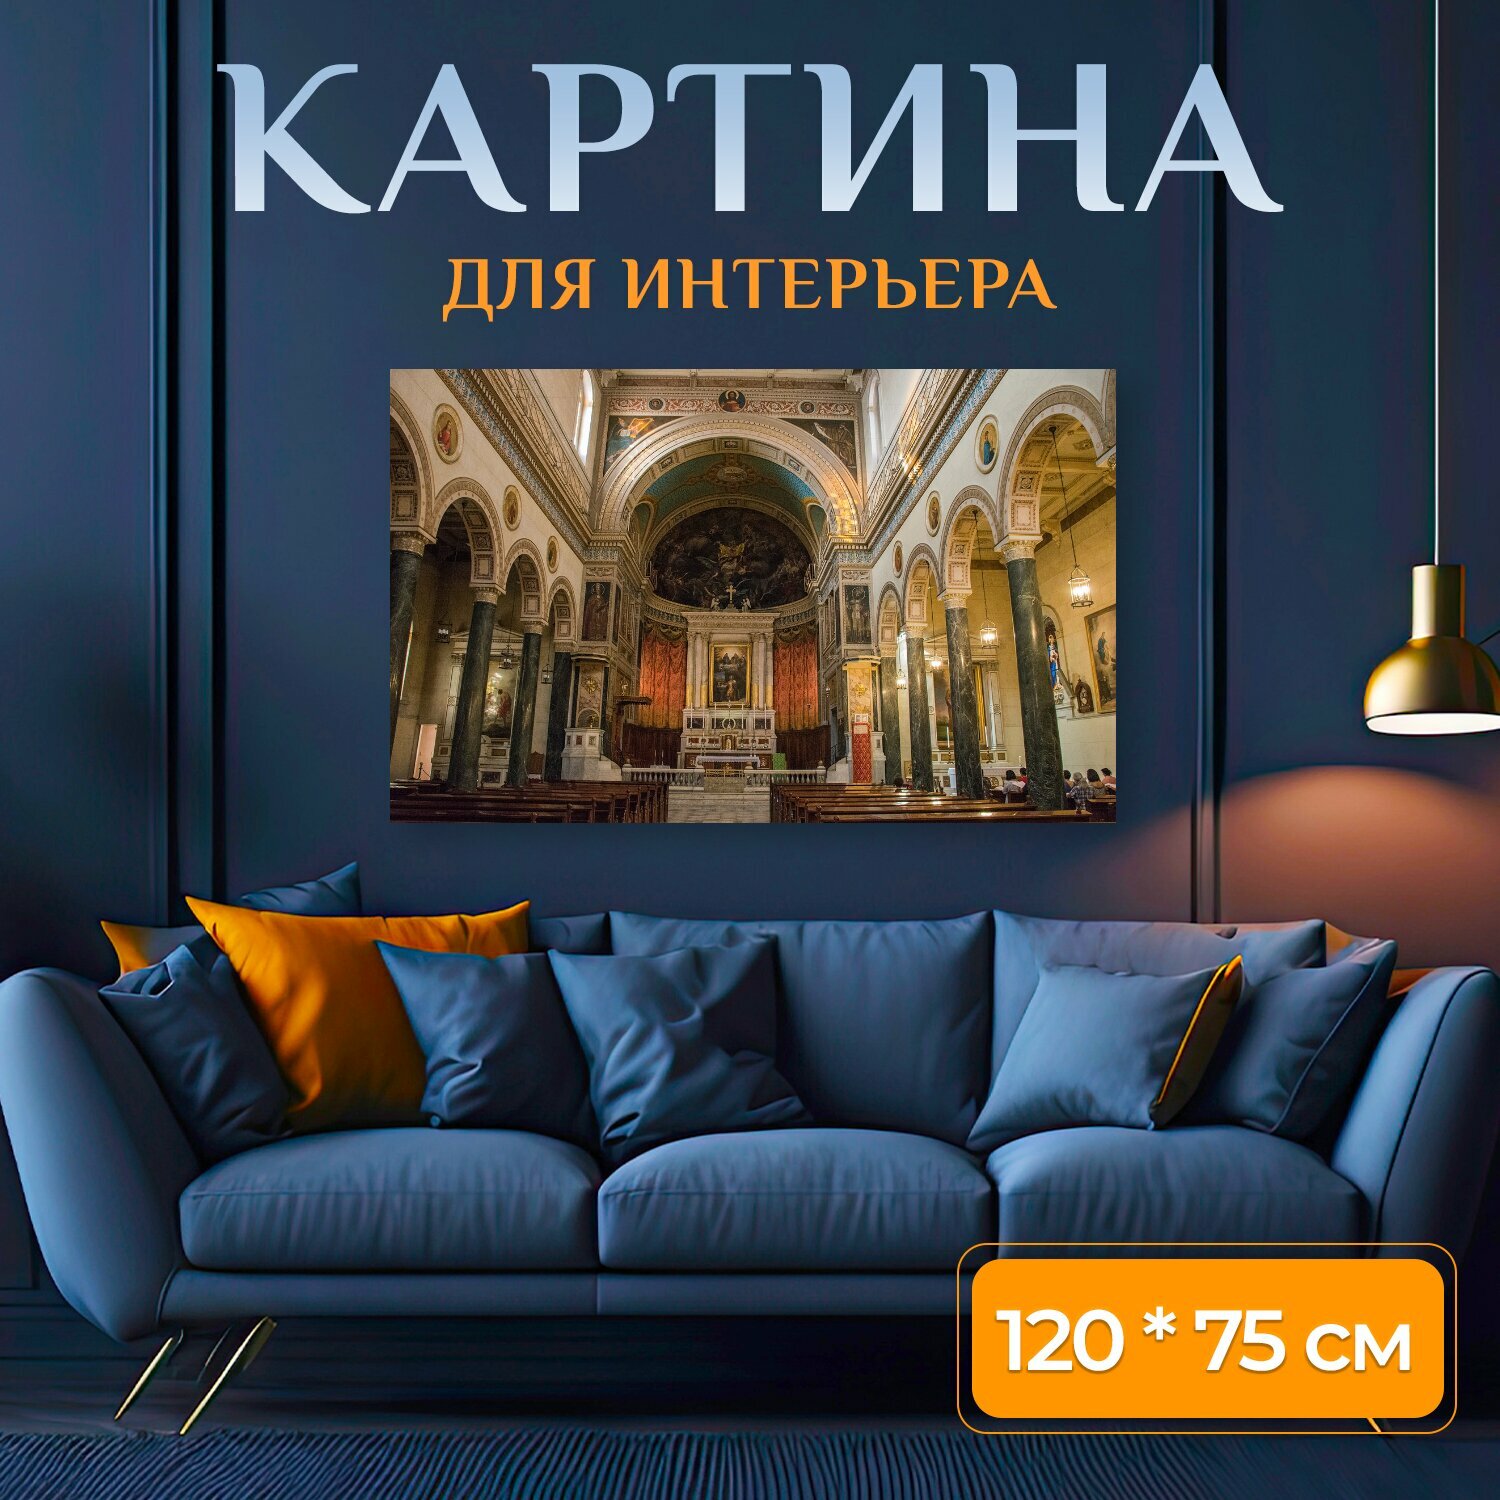 Картина на холсте "Церковь, храм, архитектура" на подрамнике 120х75 см. для интерьера